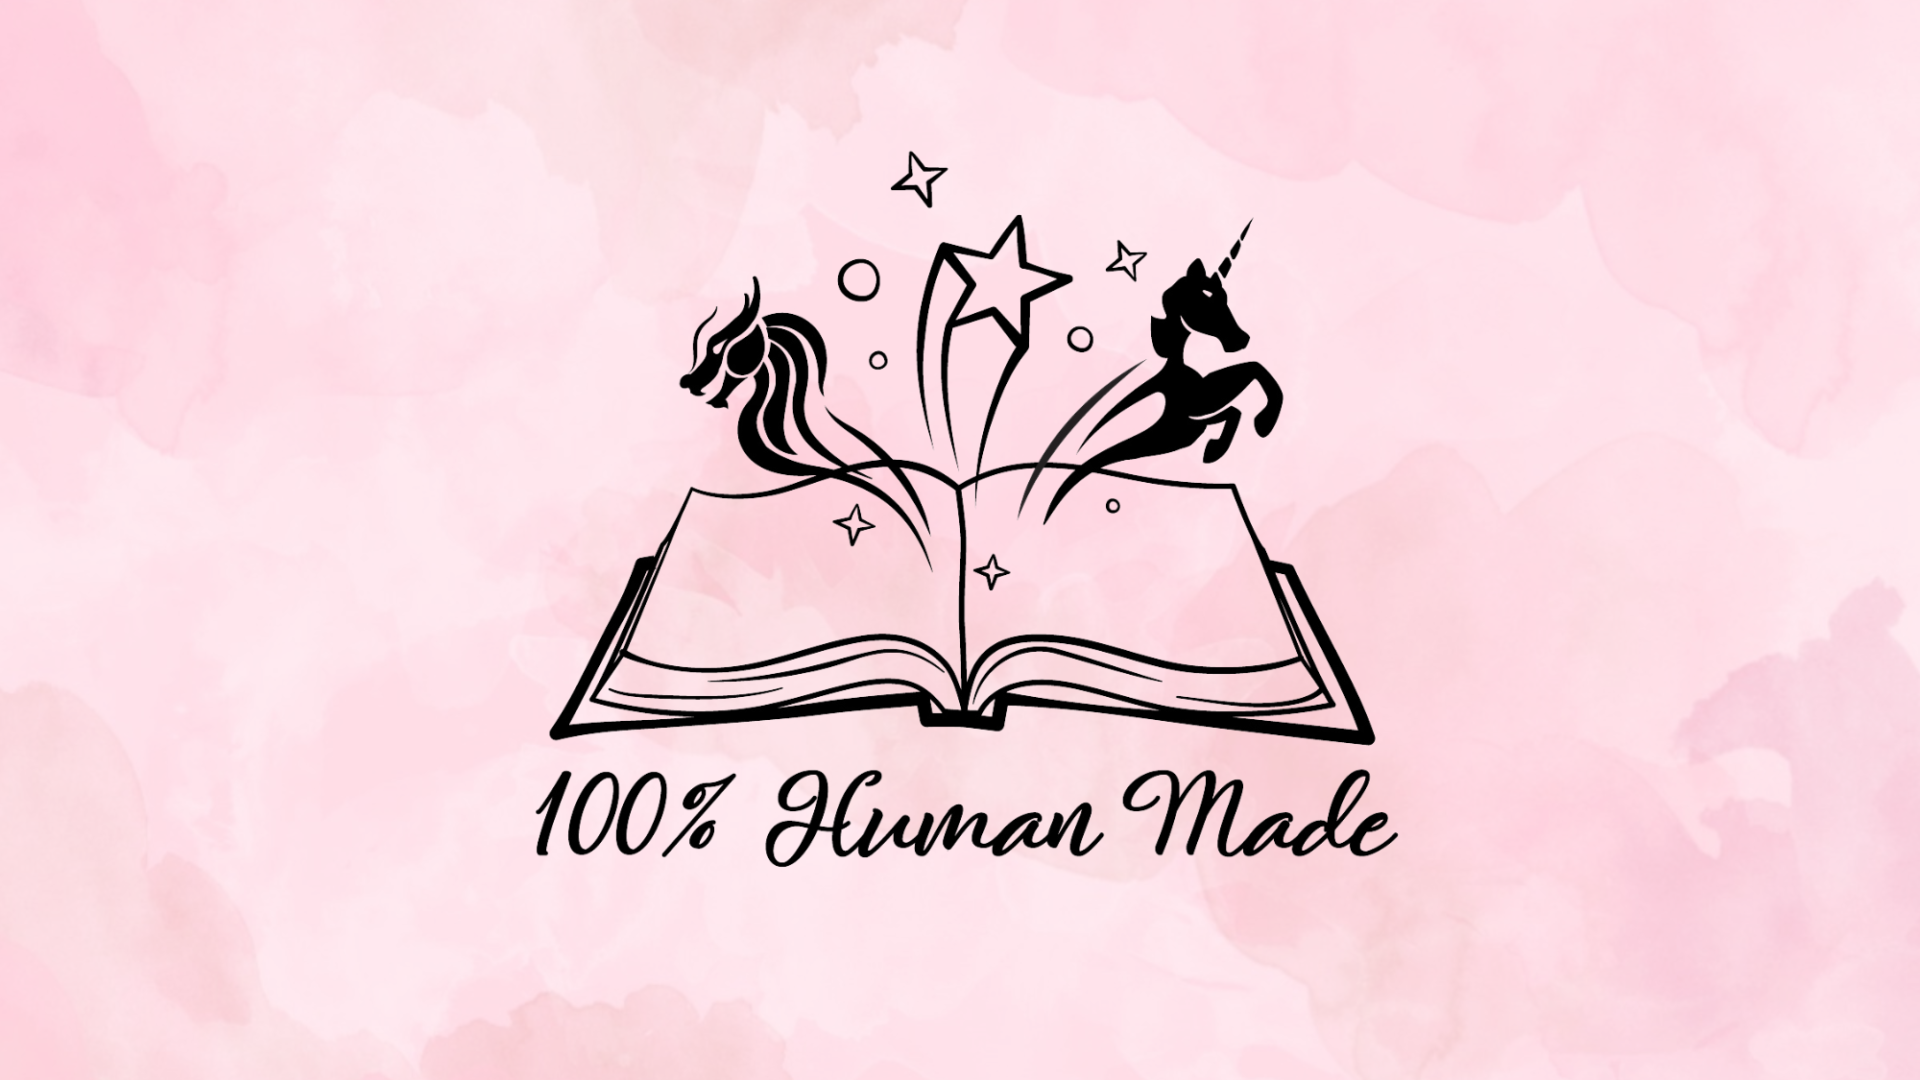 100% Human Made